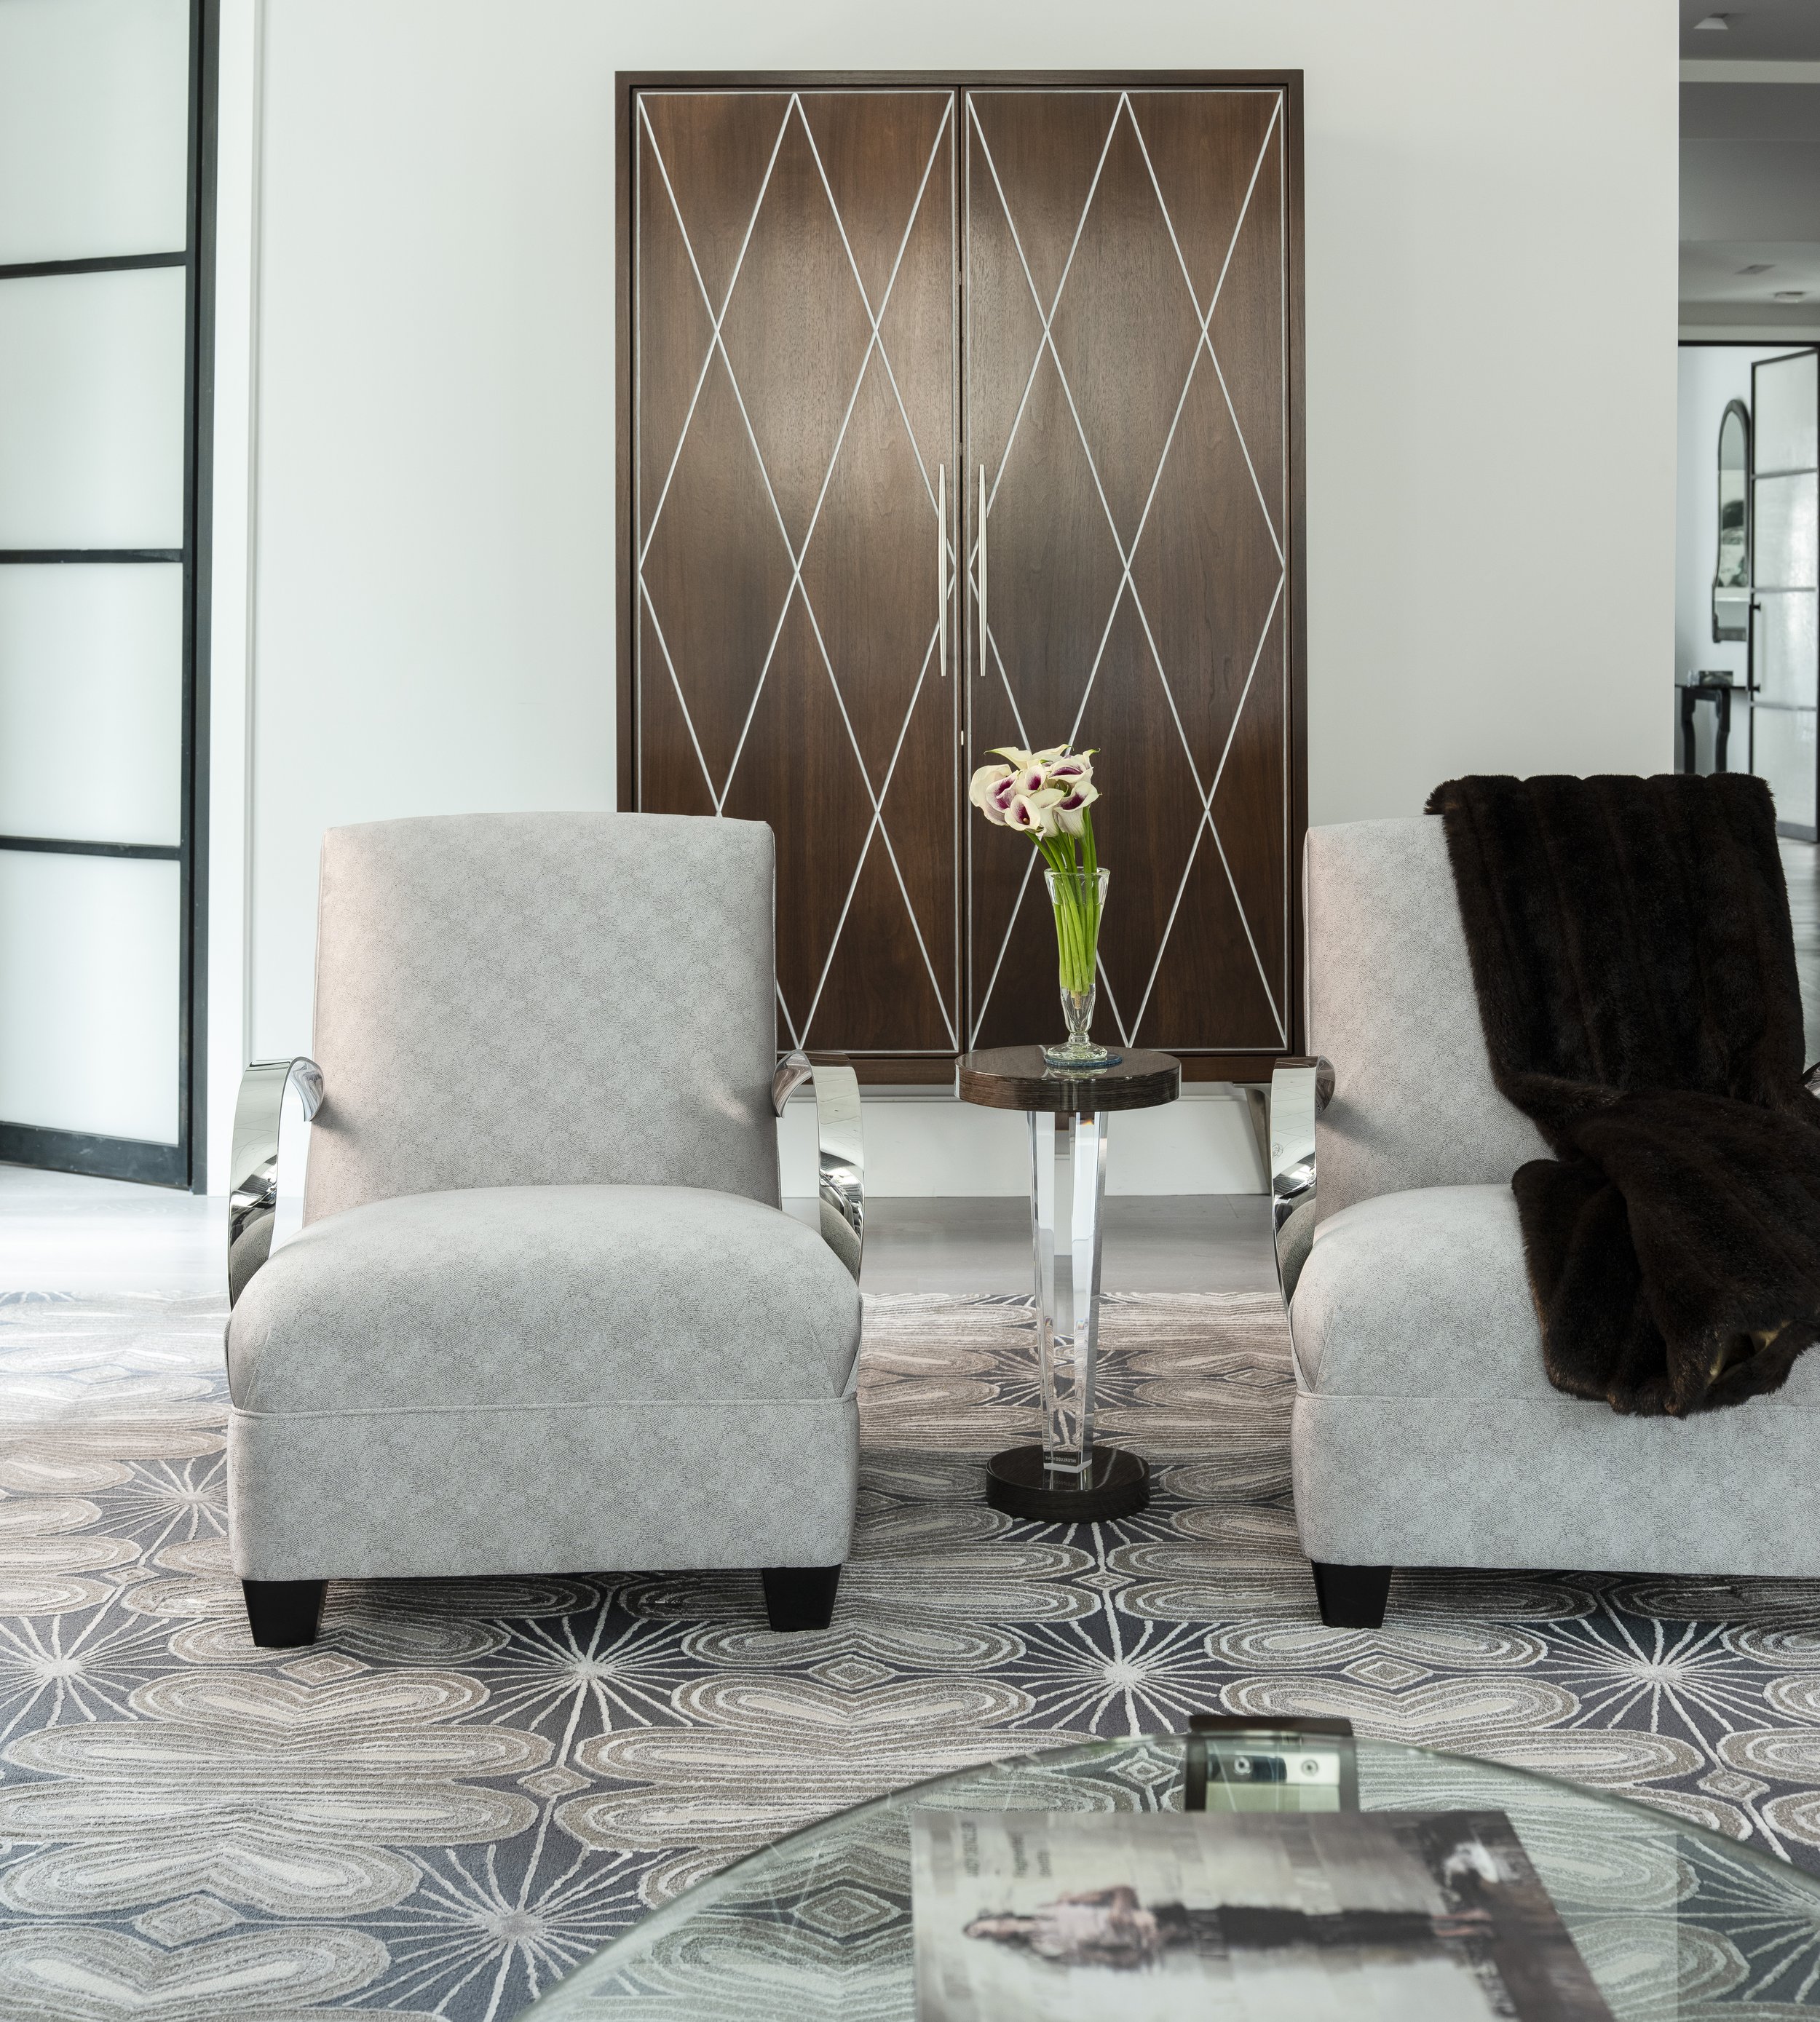 6-modern-chairs-patterned-rug-ambience-interior-designs-manhattan.jpg